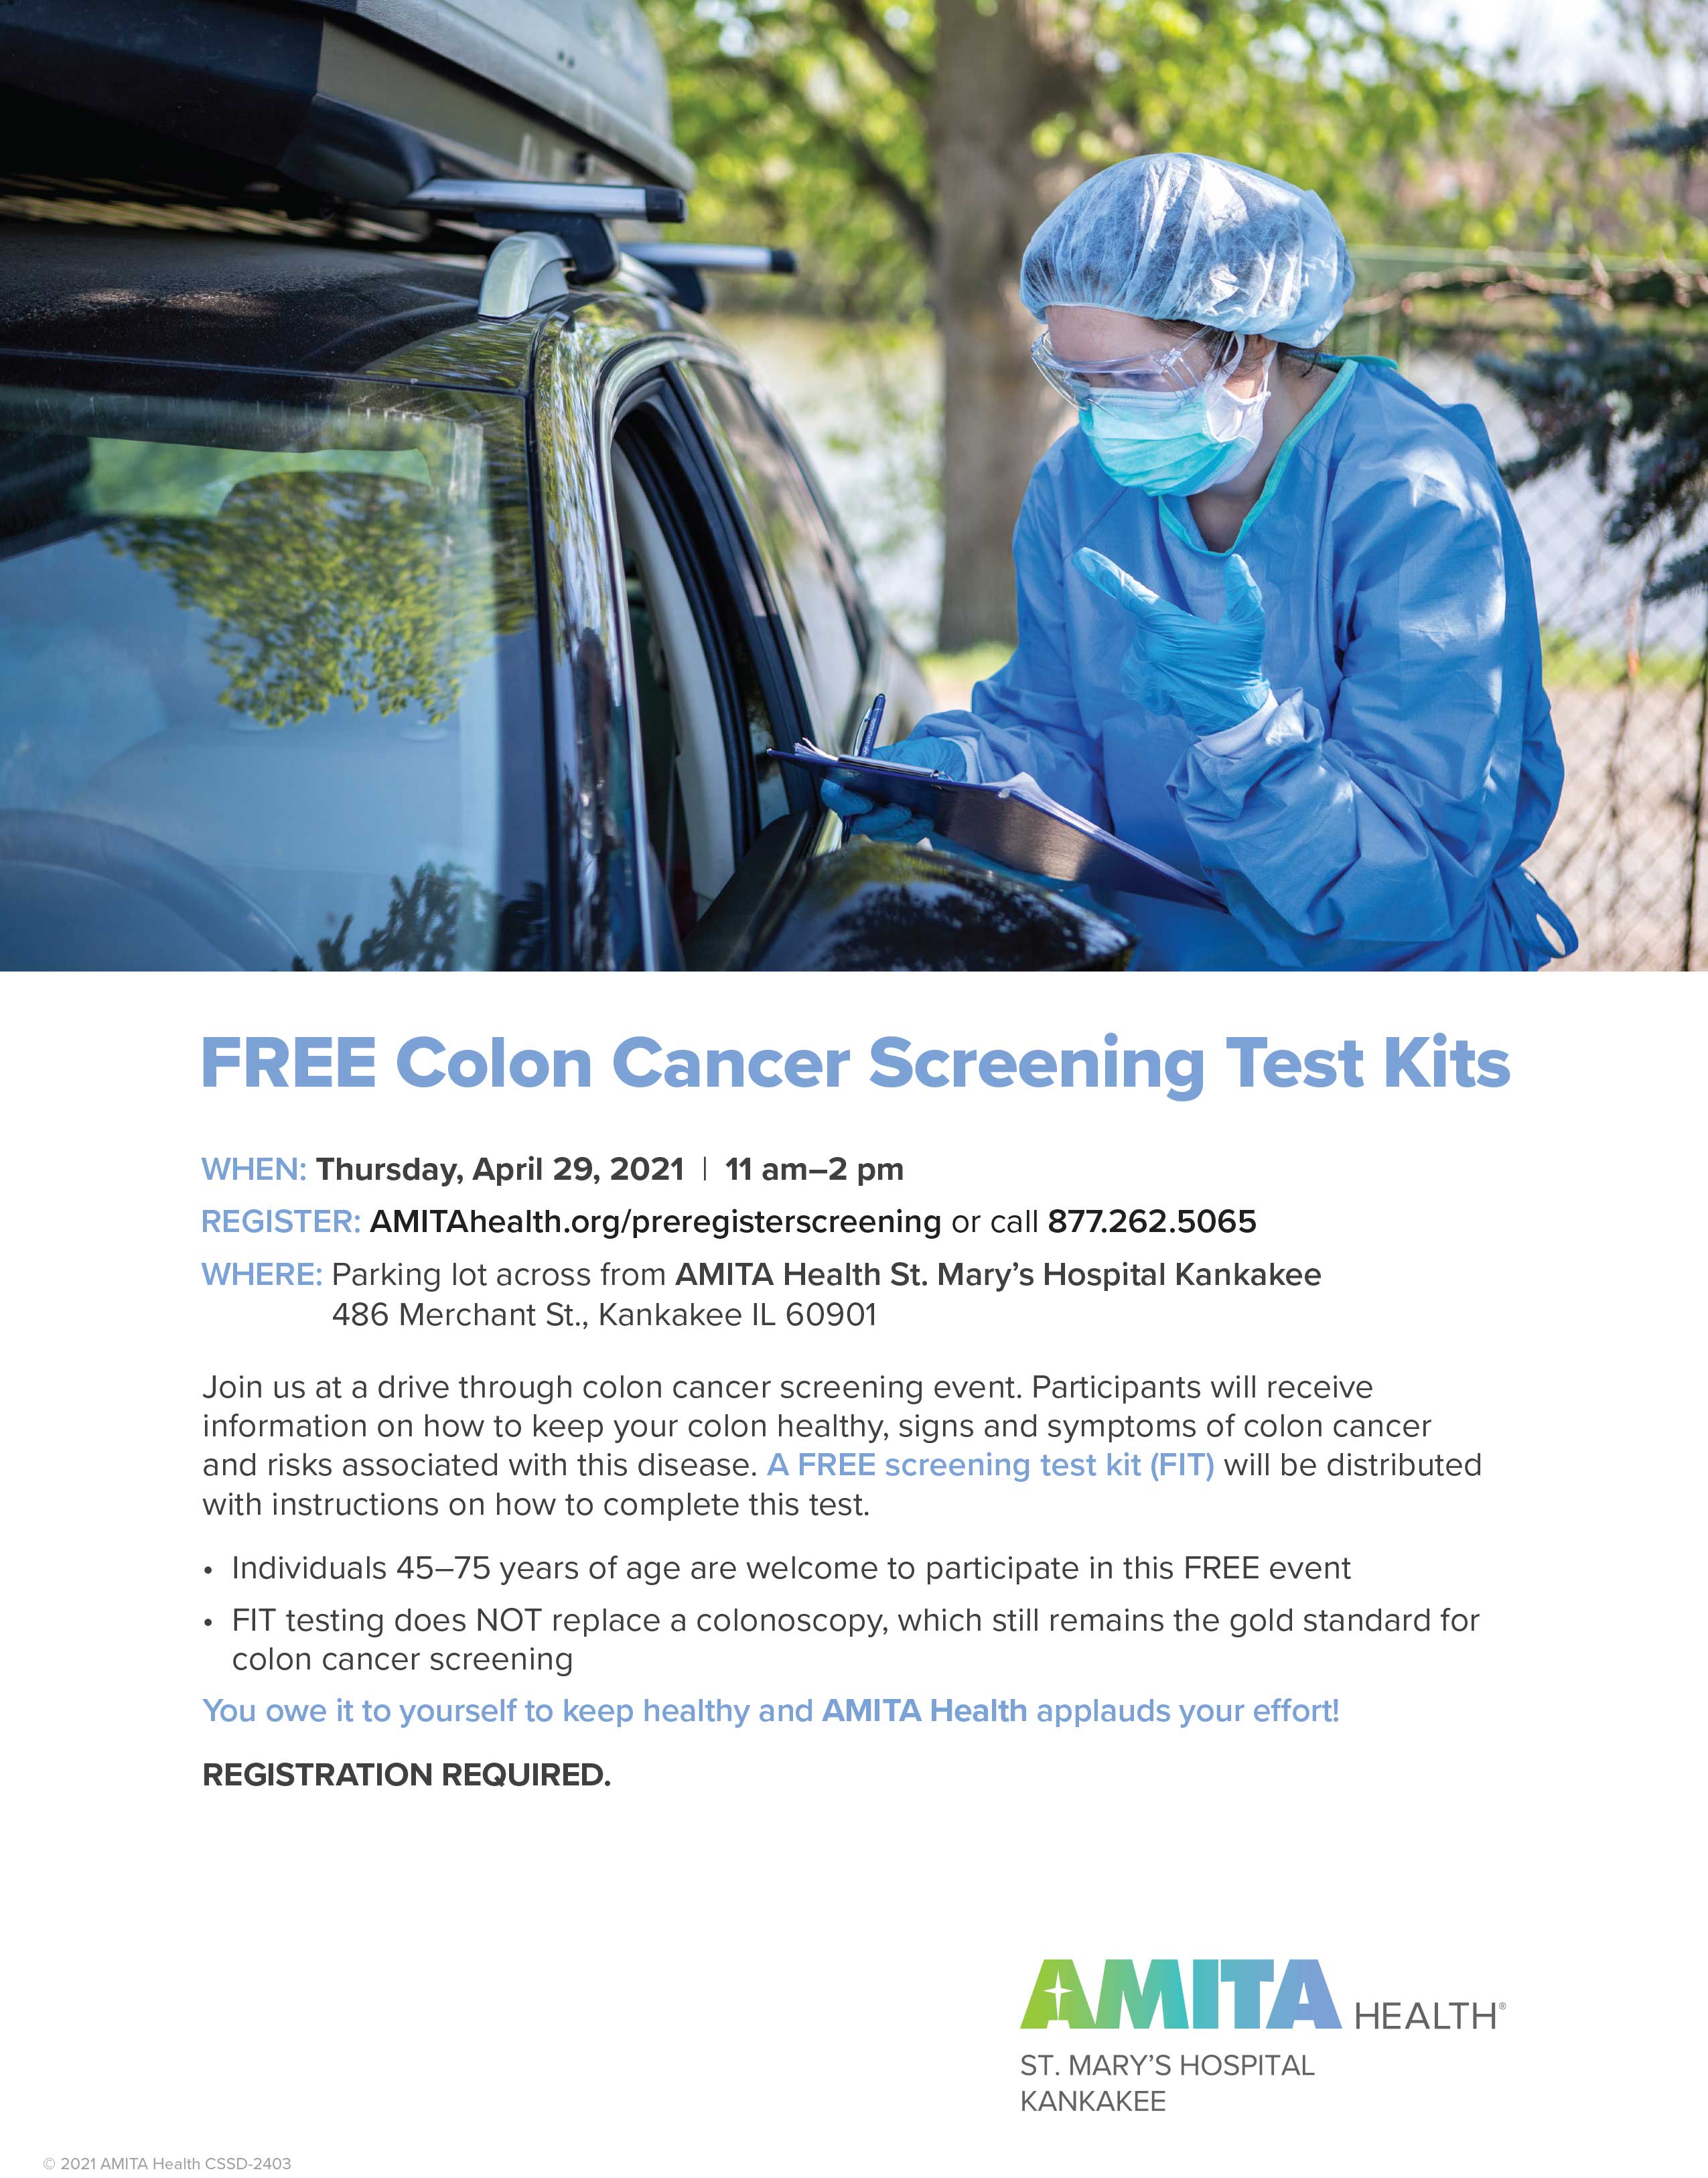 FREE Colon Cancer Screening Test Kits